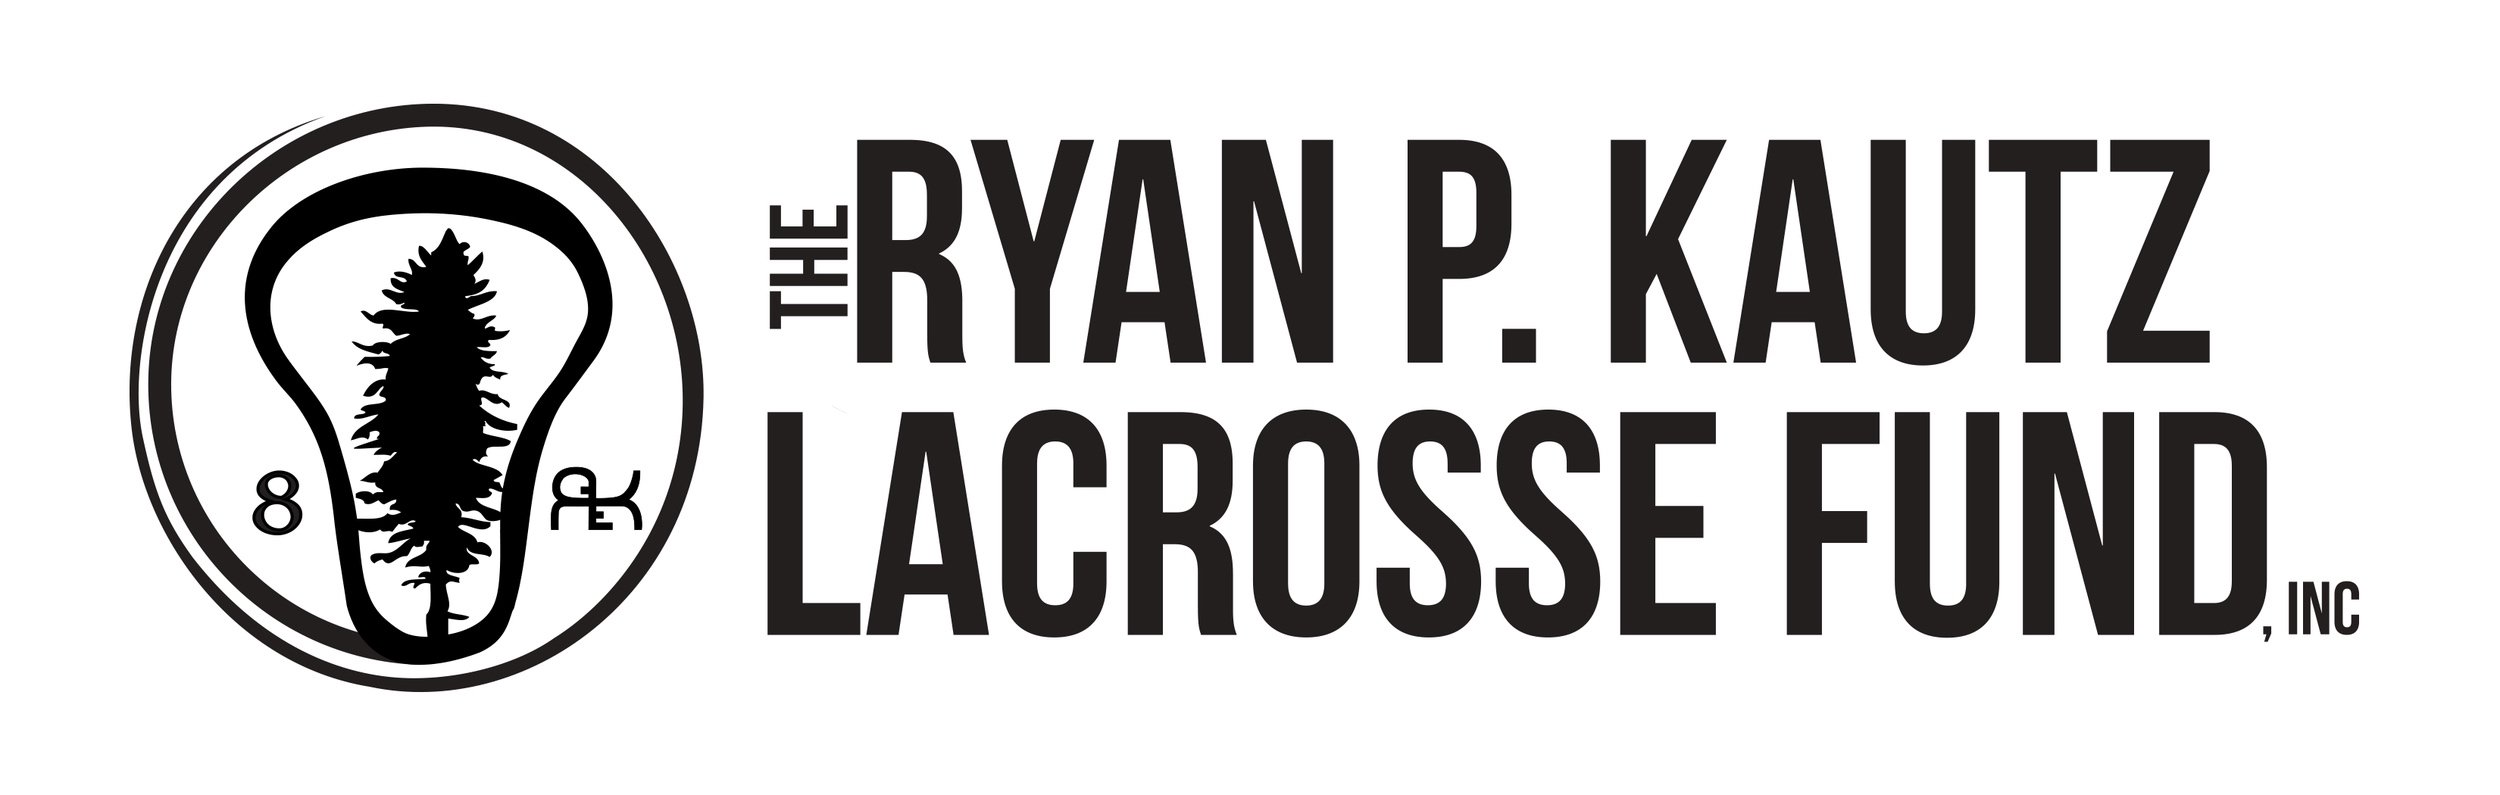 The Ryan P. Kautz Lacrosse Fund, Inc.